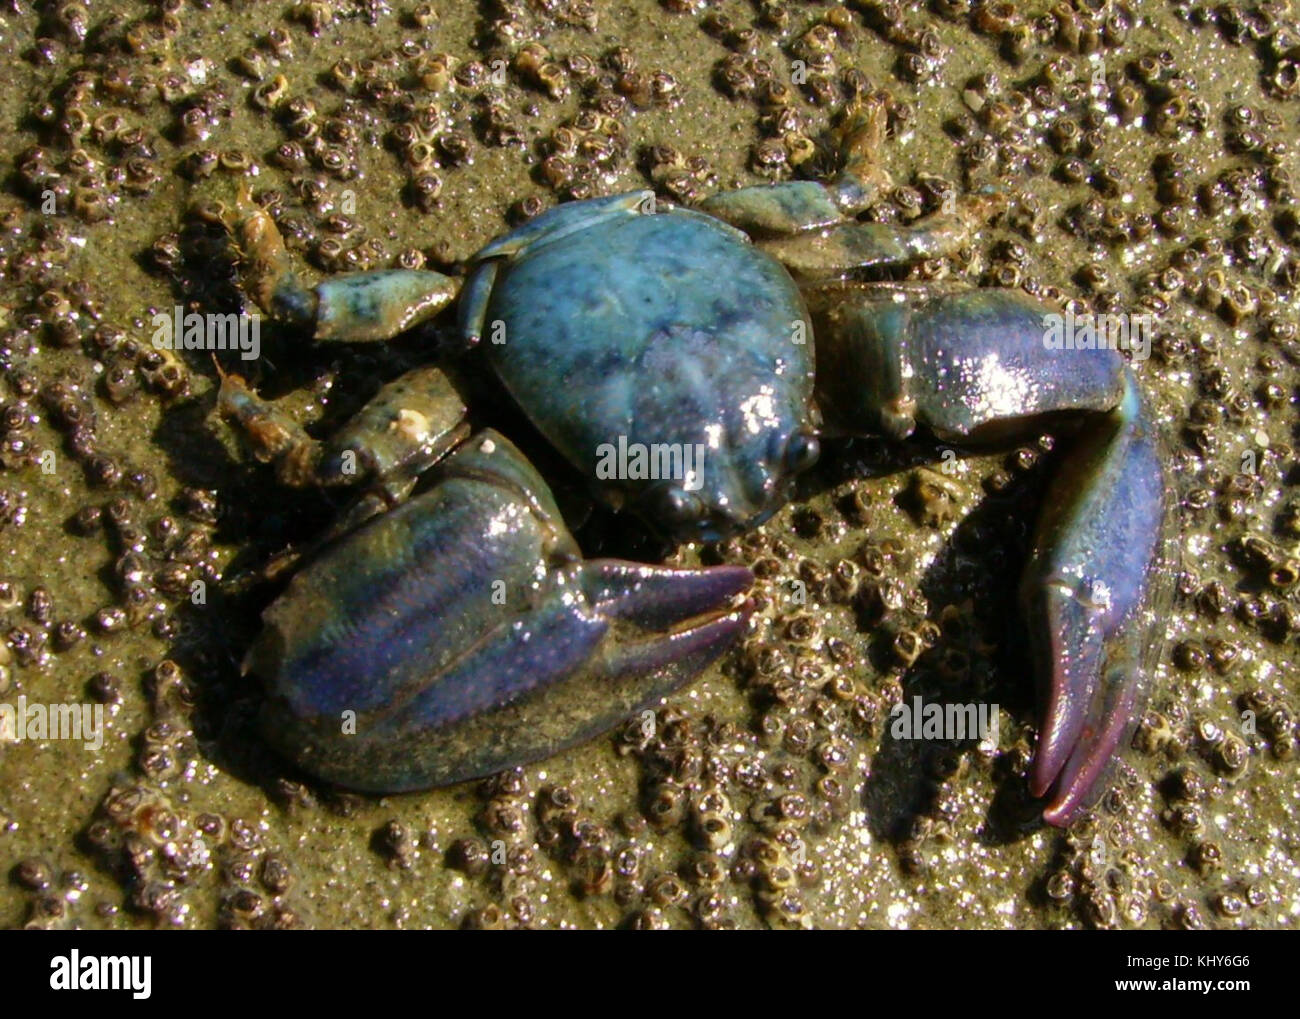 Petrolisthes elongatus (New Zealand half crab) Stock Photo